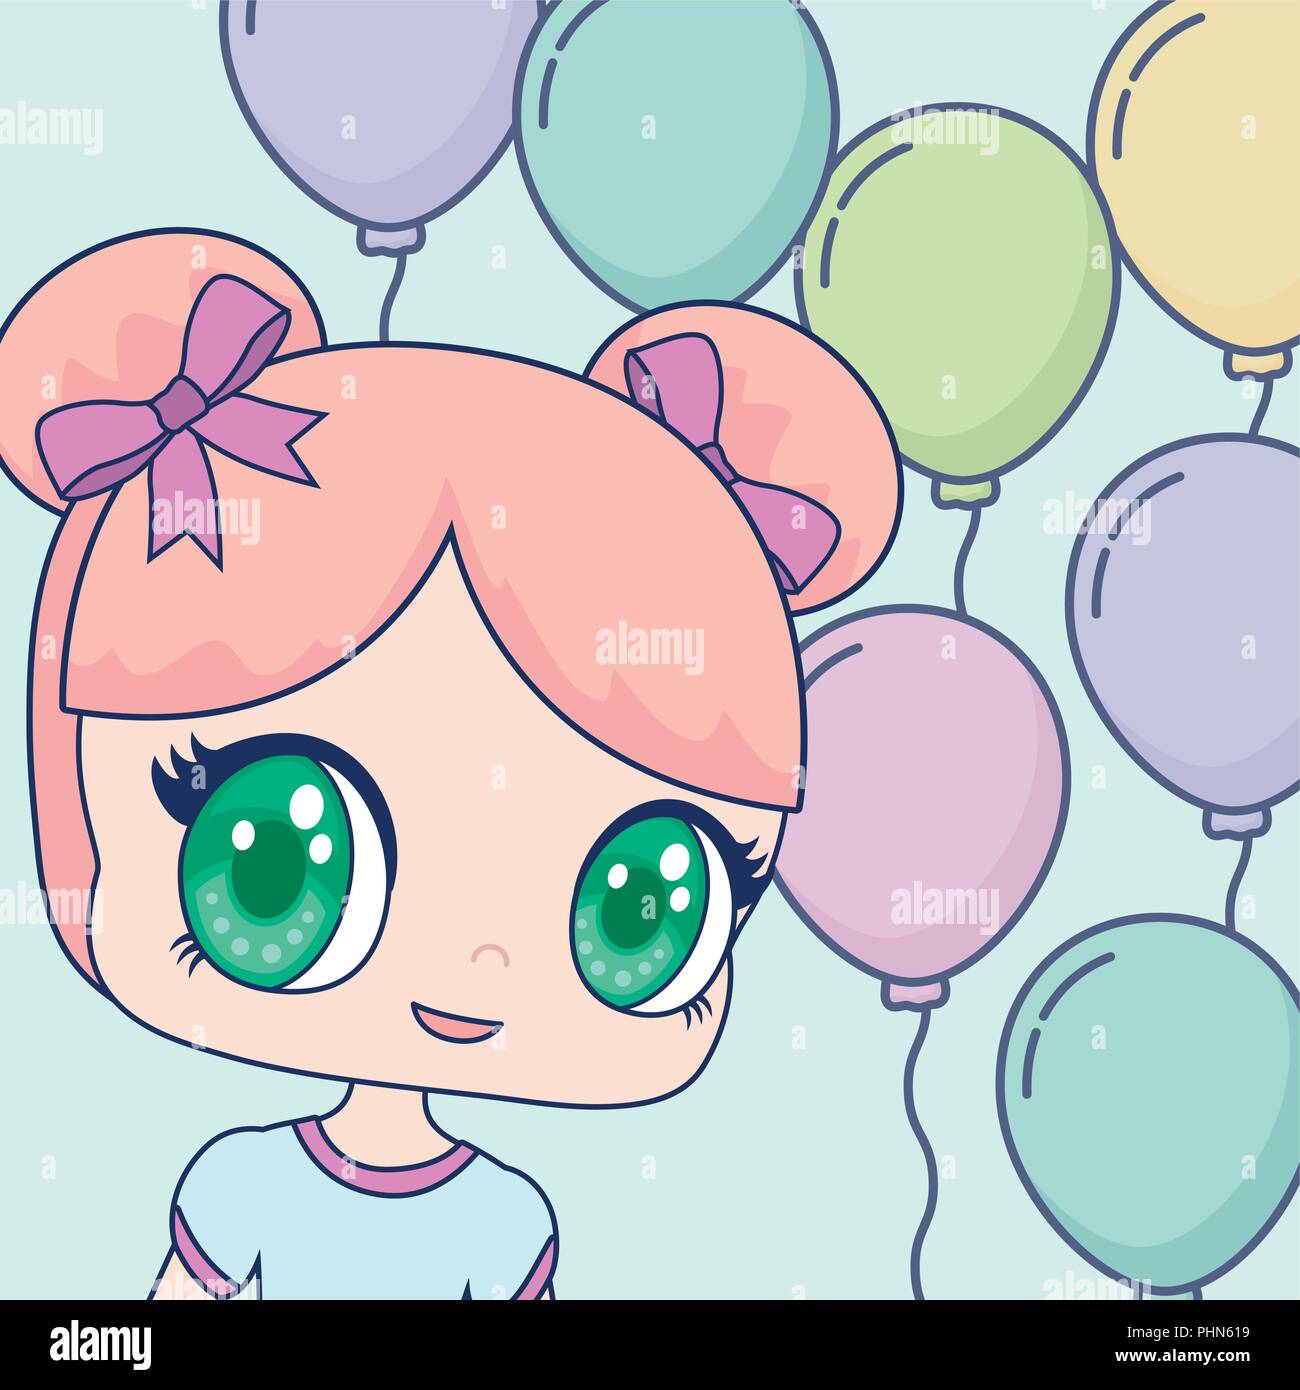 happy birthdaydesign with kawaii anime girl with related icons